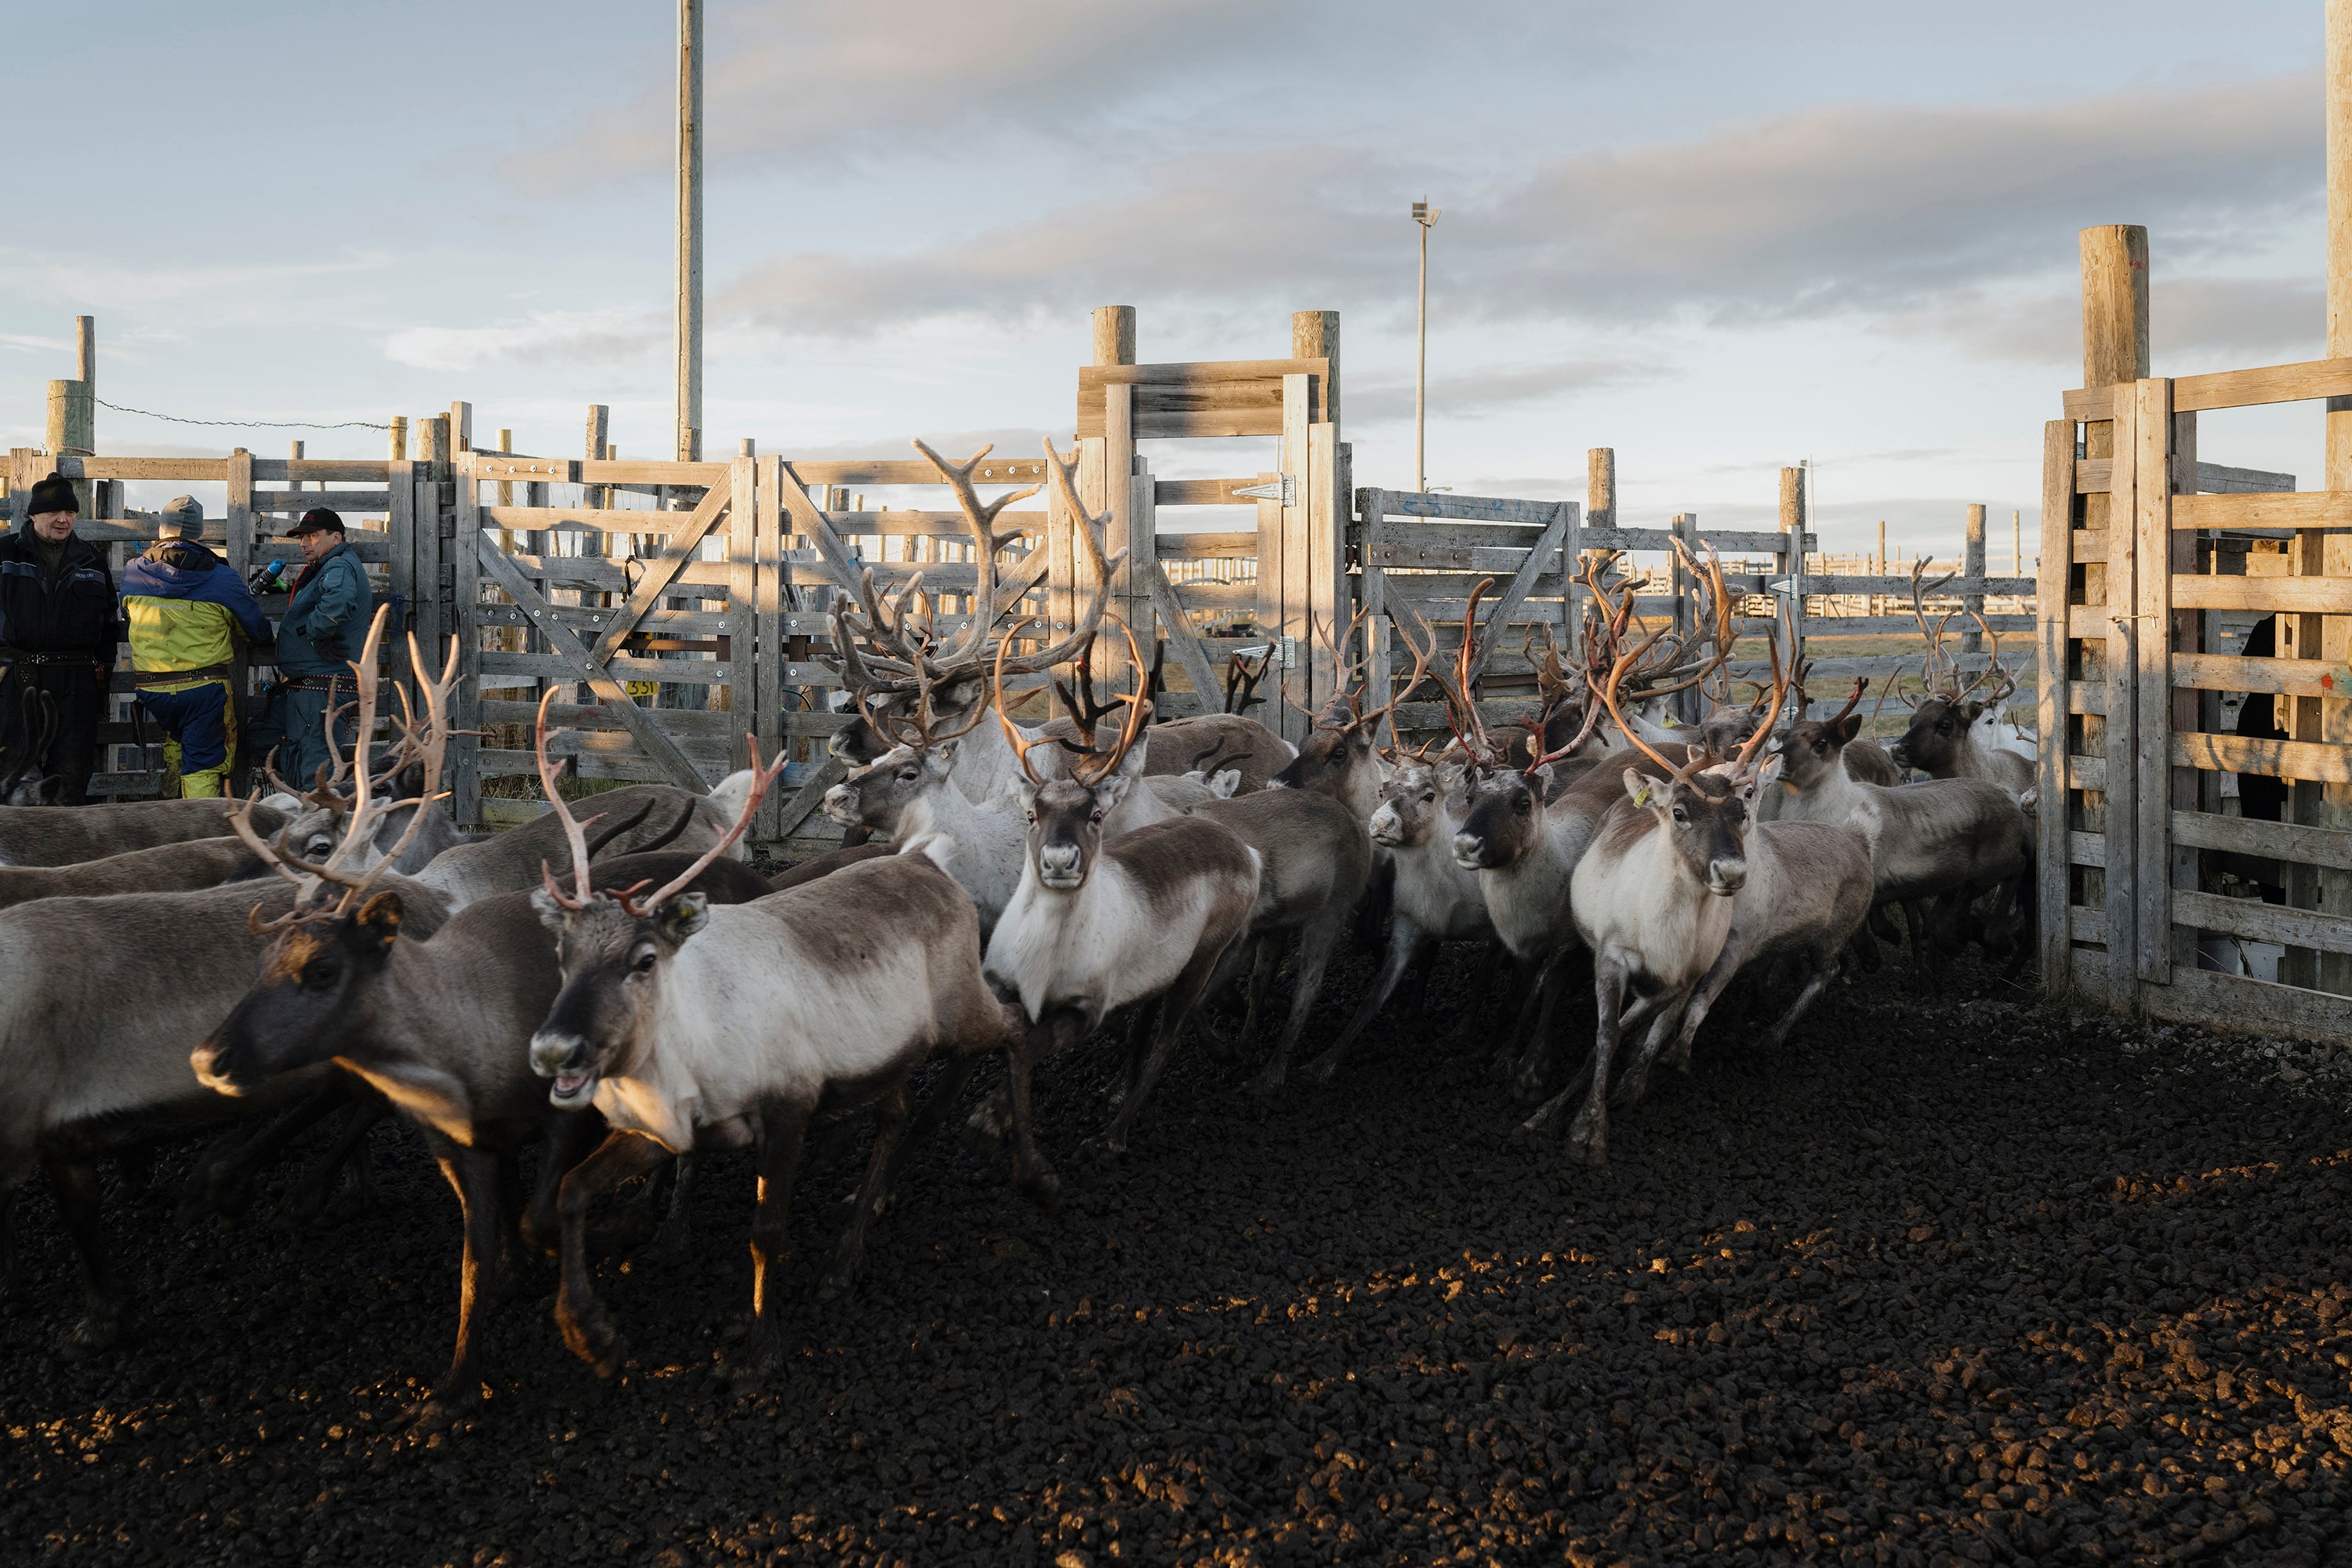 Herding reindeer has long been a critical part of Sámi culture in Finland